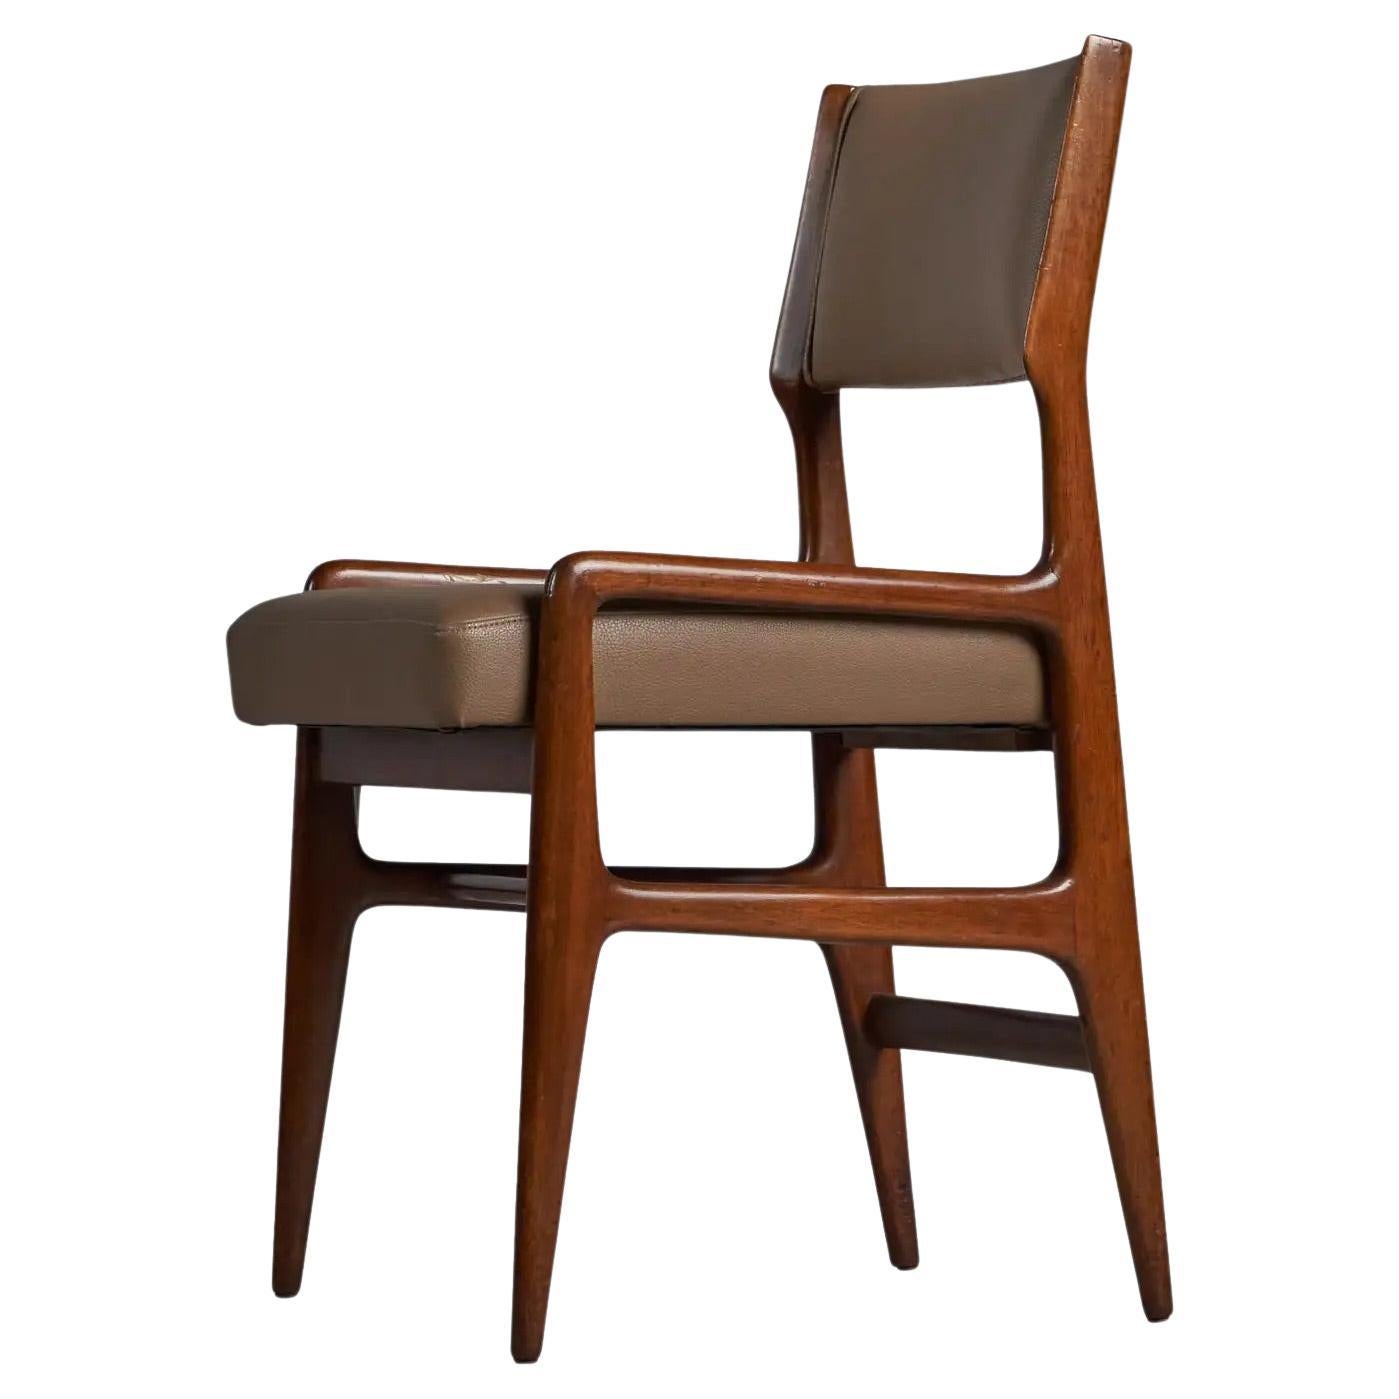 4 X Gio Ponti, Dining Chair, Walnut, Leather, Italy, 1960s for Liliana